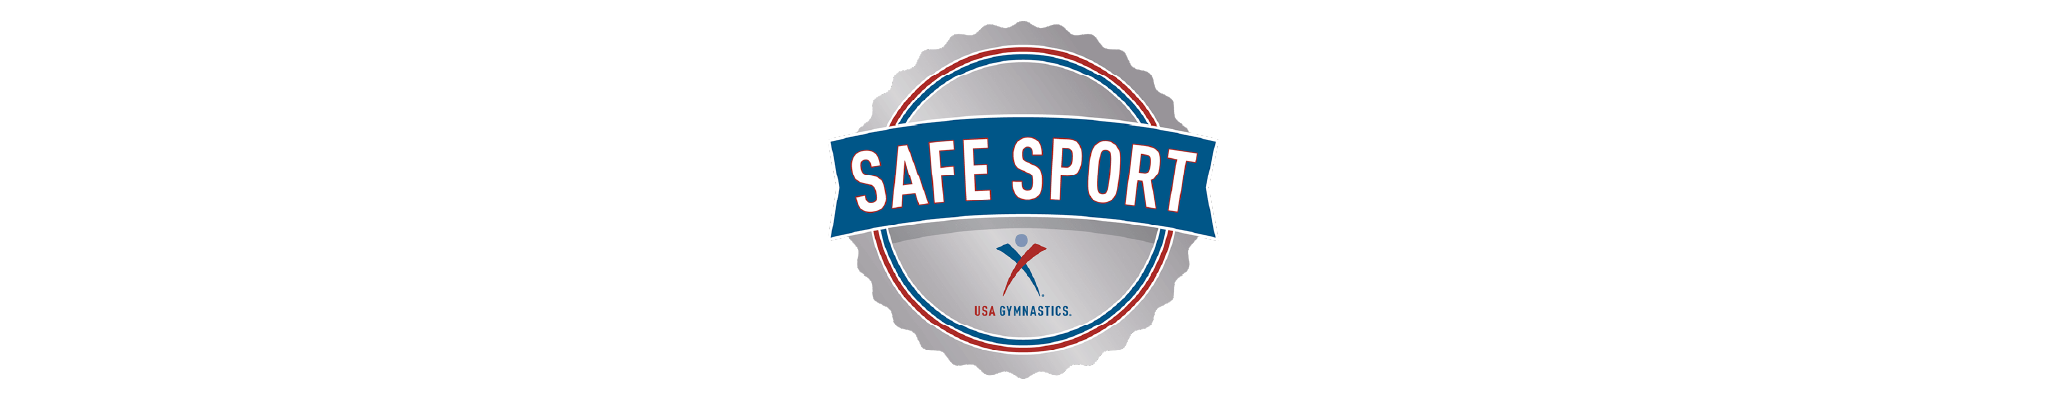 USA Club Gymnastics Safe Sport banner